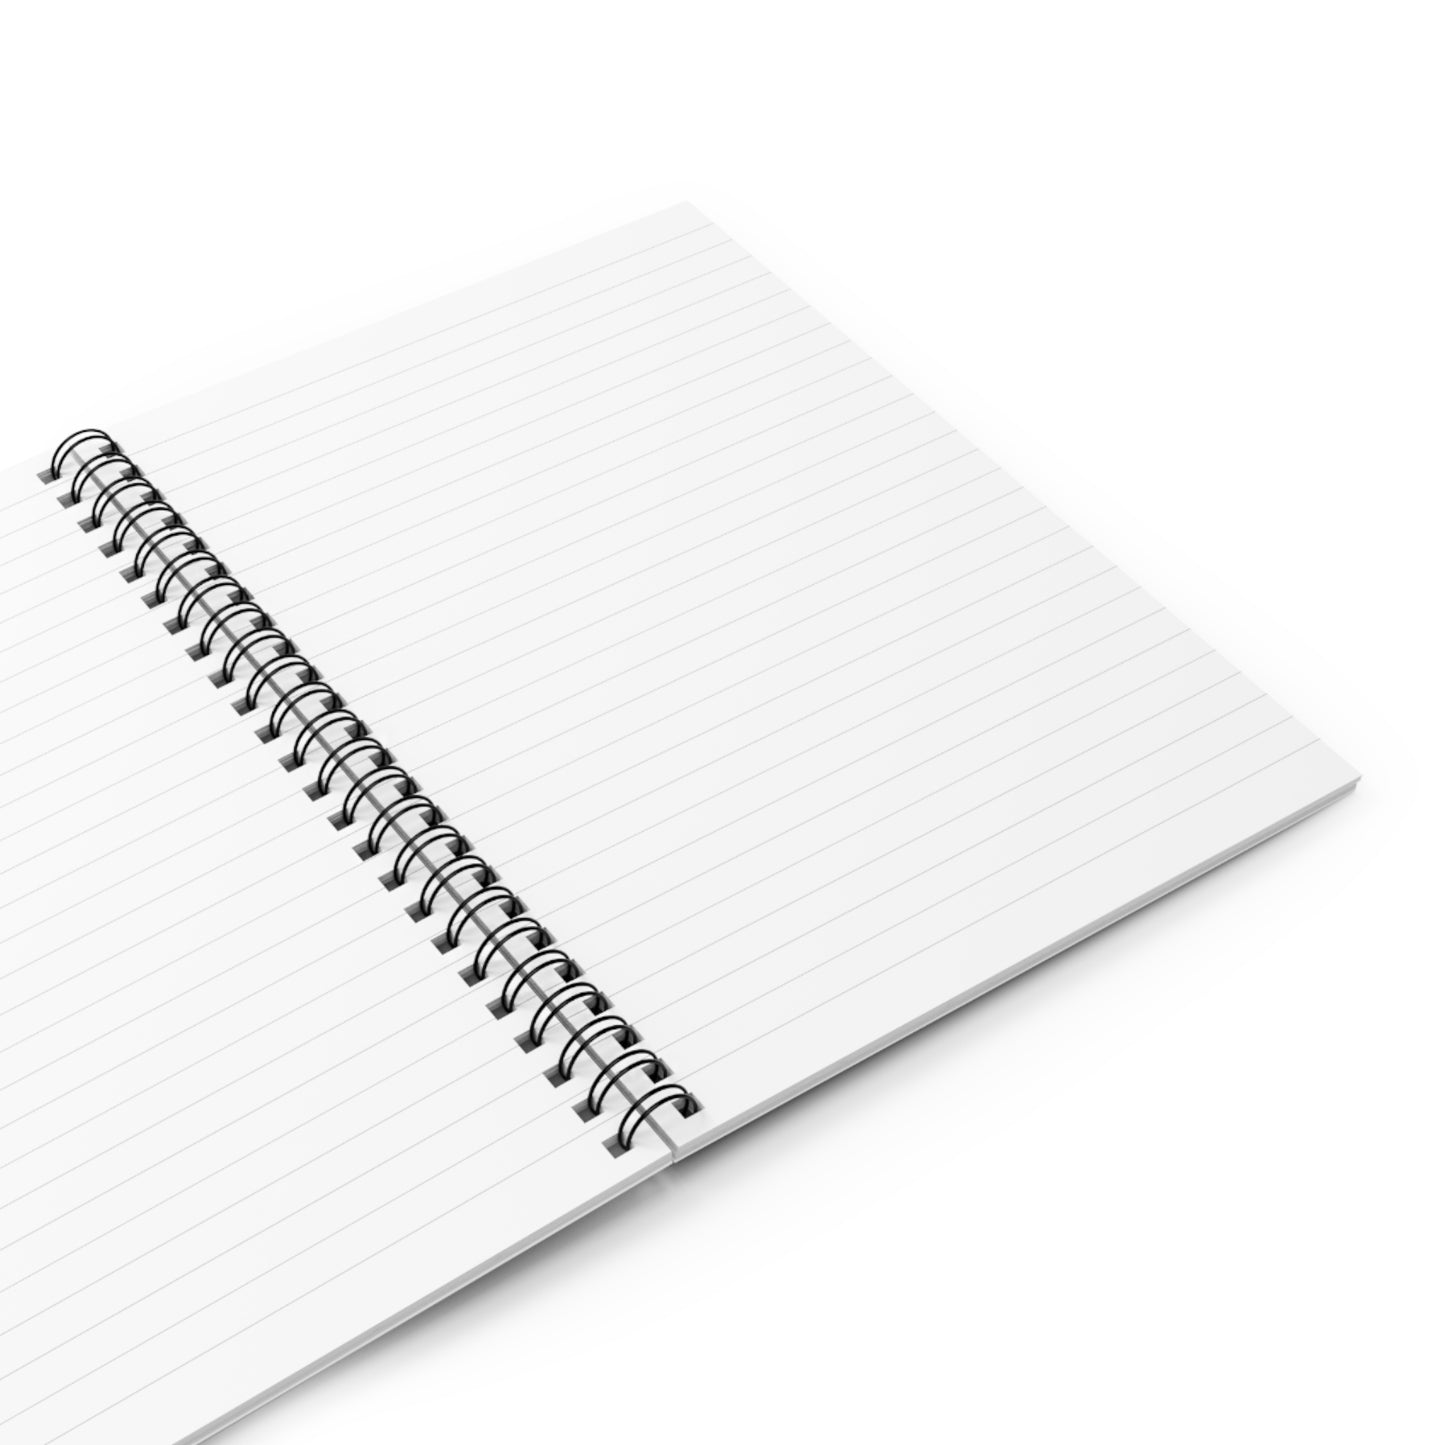 Stevie- Ruled Line Notebook